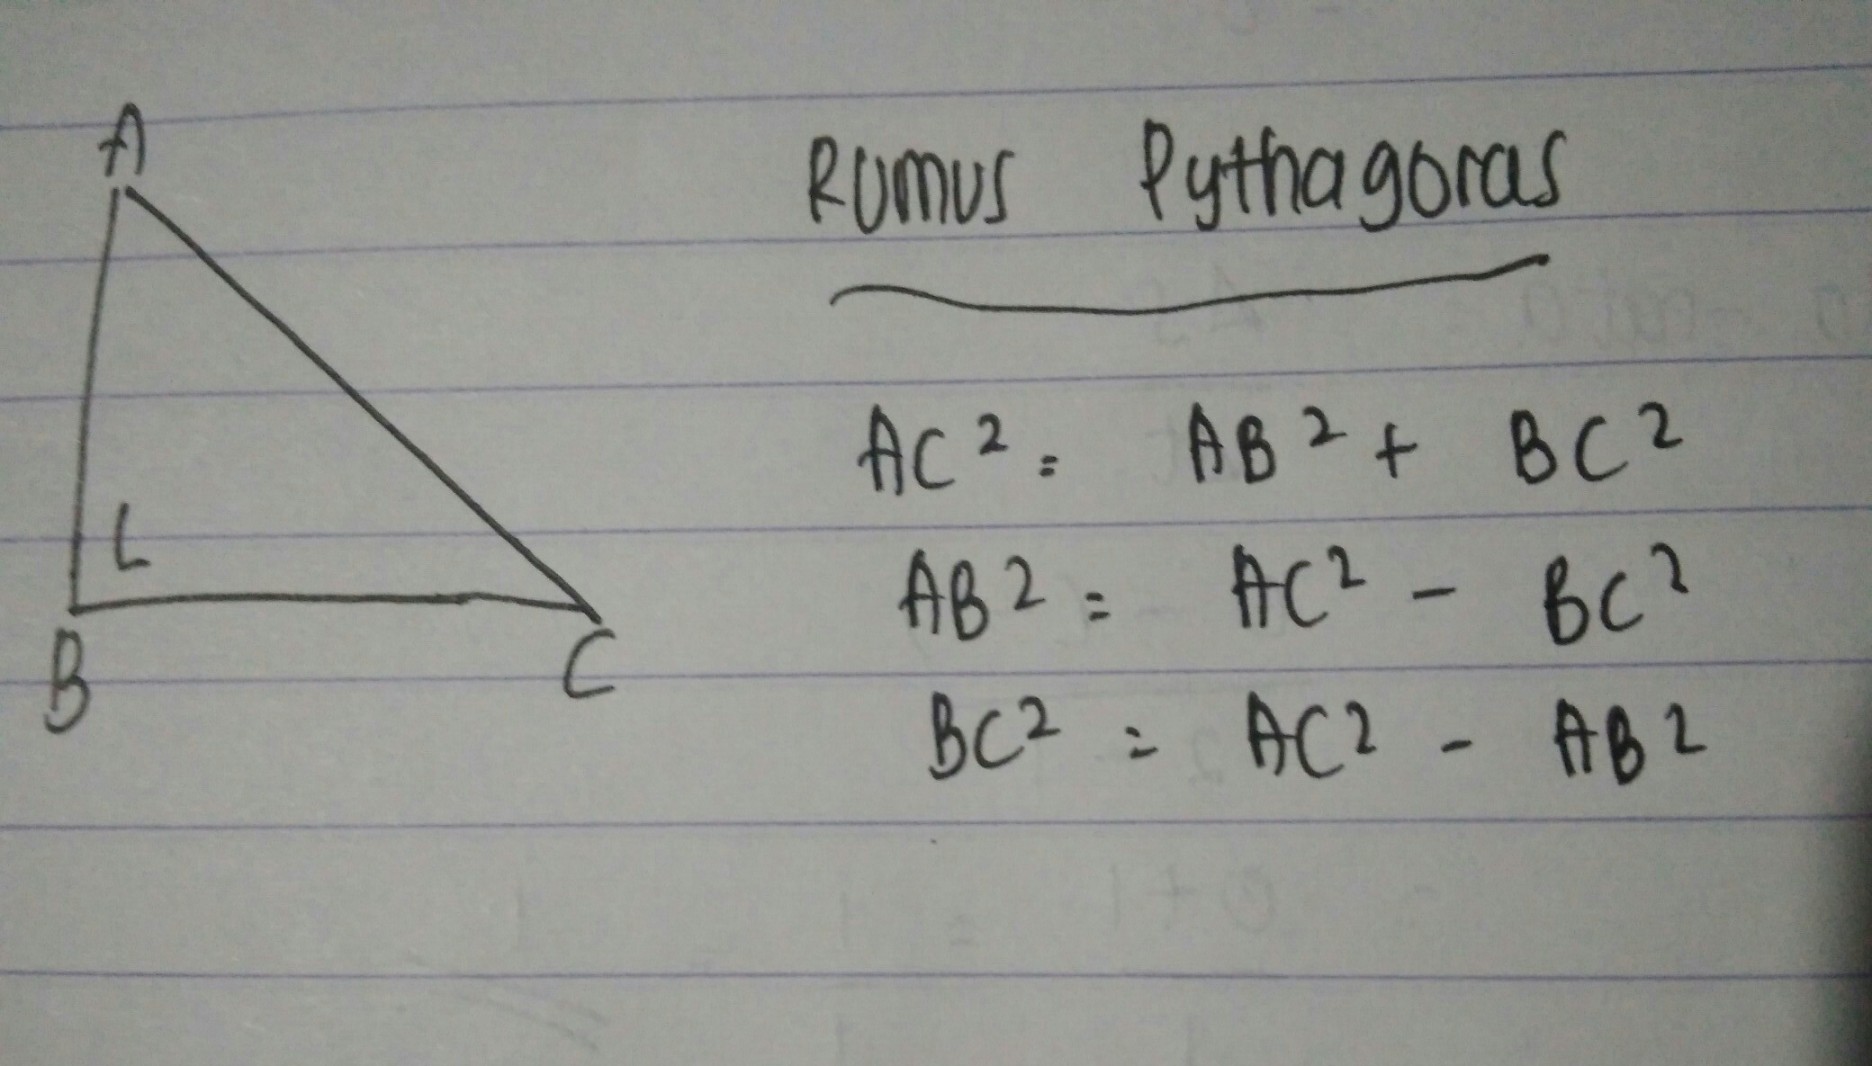 Rumus pythagoras yang benar untuk segitiga siku-siku - Brainly.co